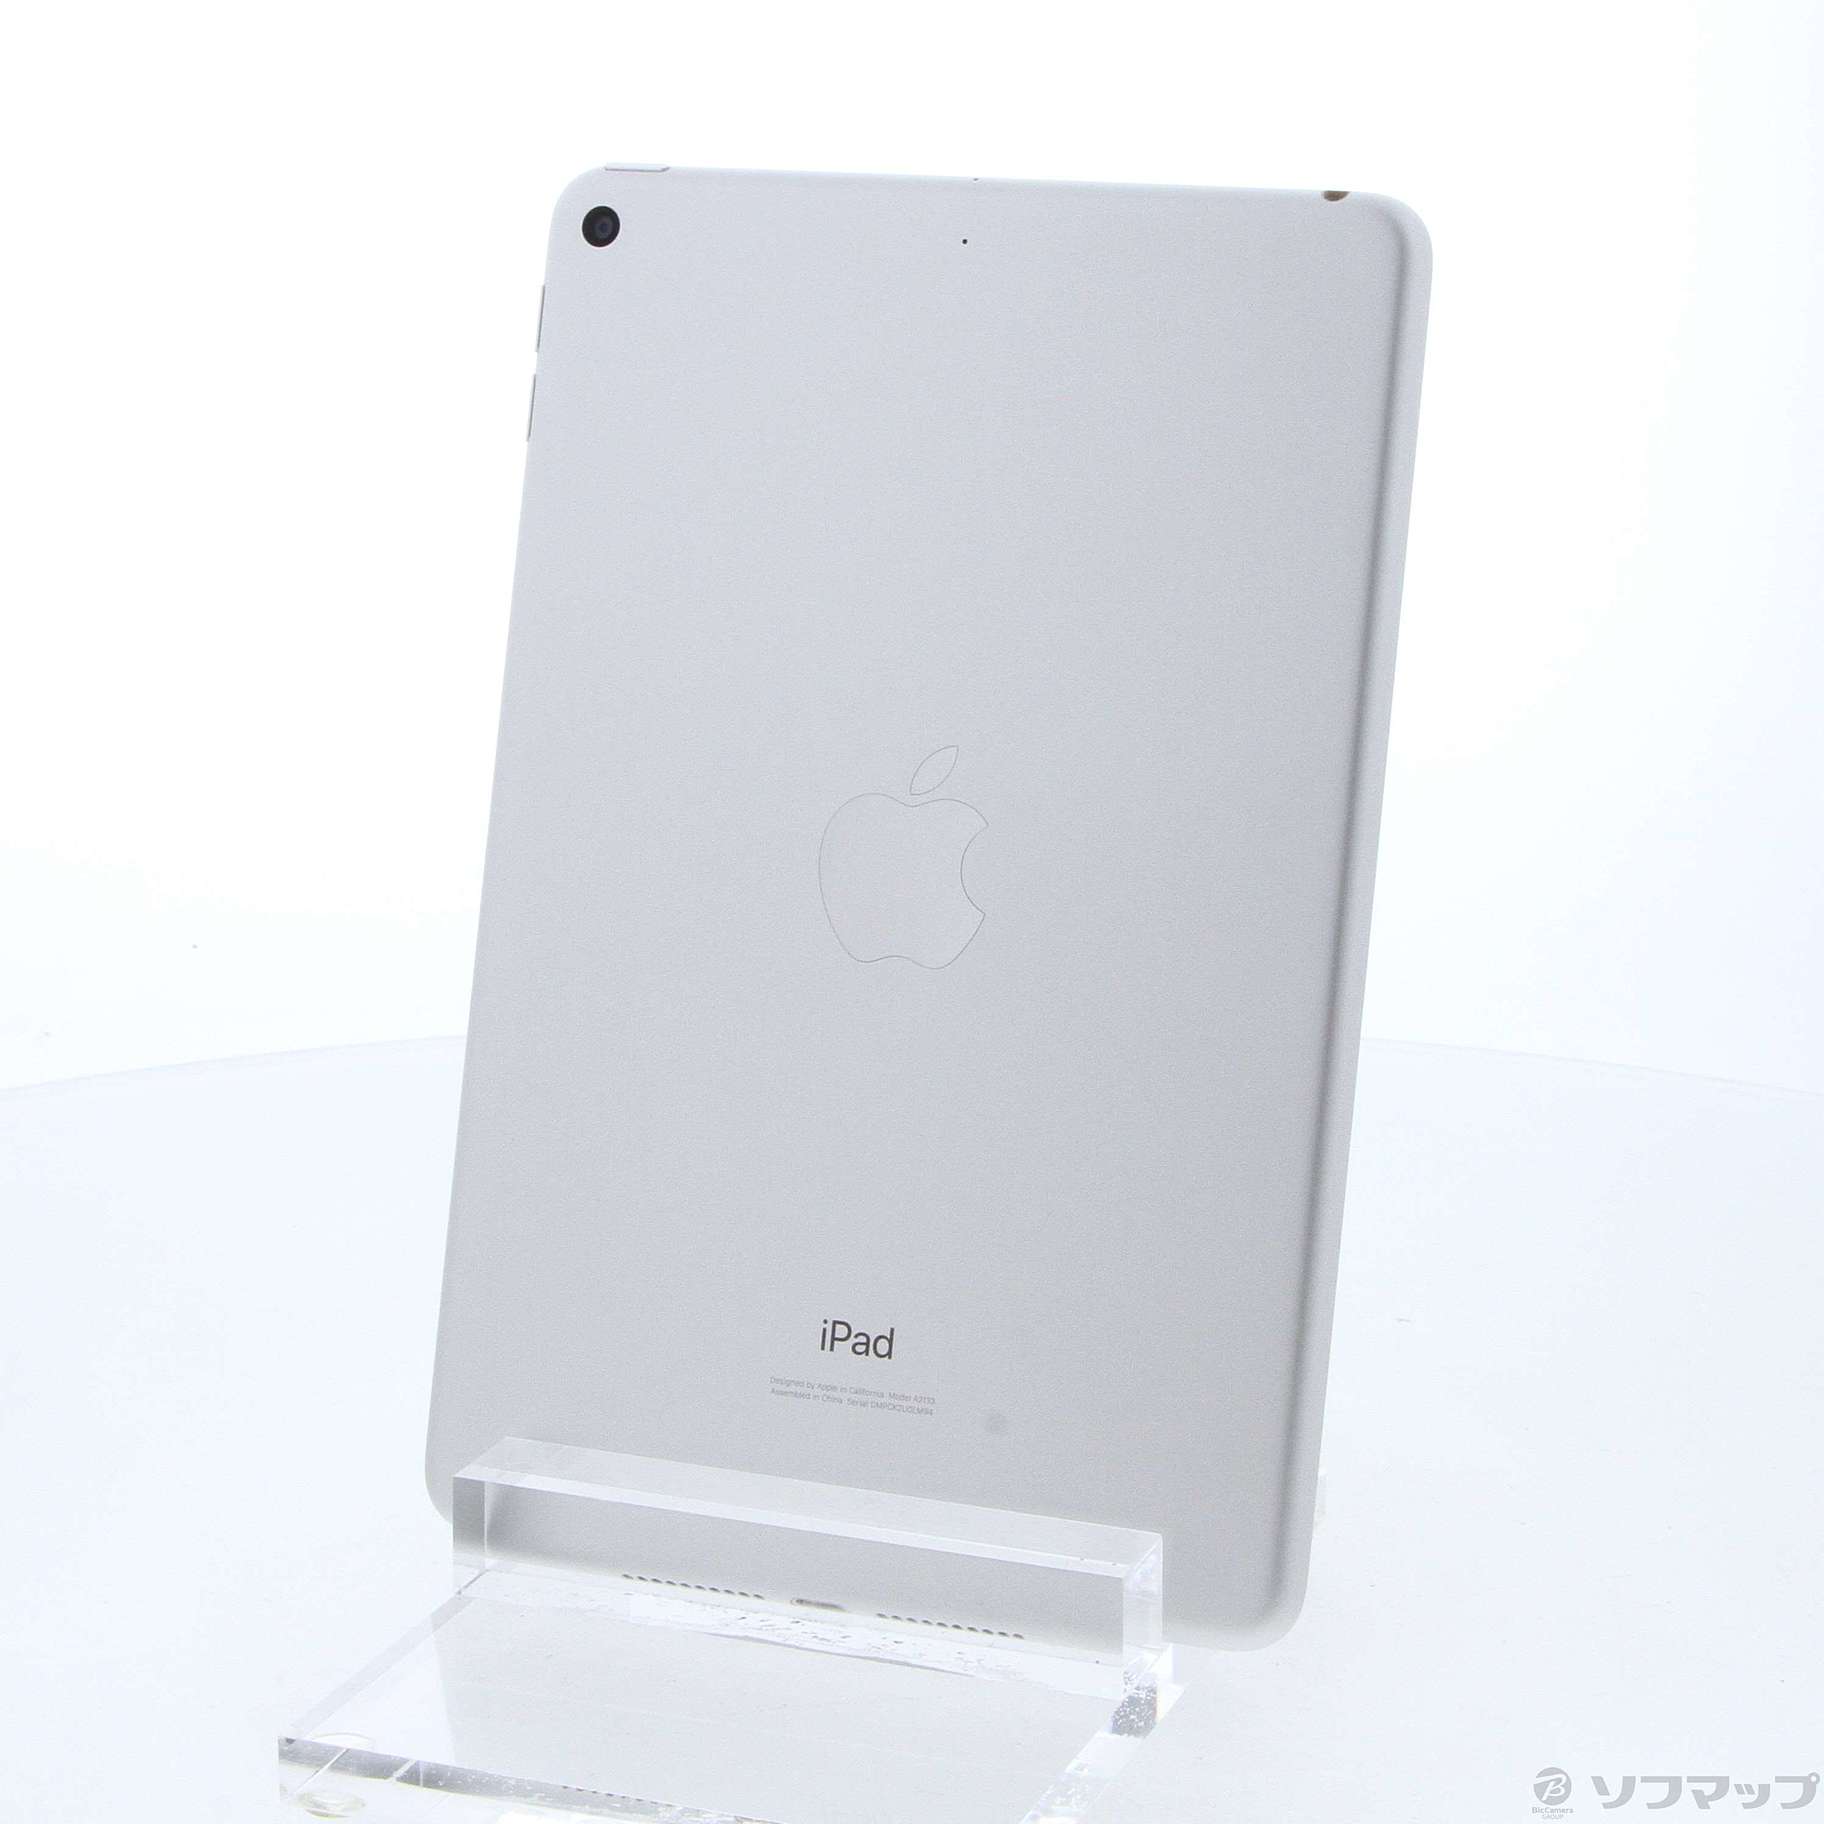 iPad mini a2133 wifiモデル、64GB ホワイトPC/タブレット